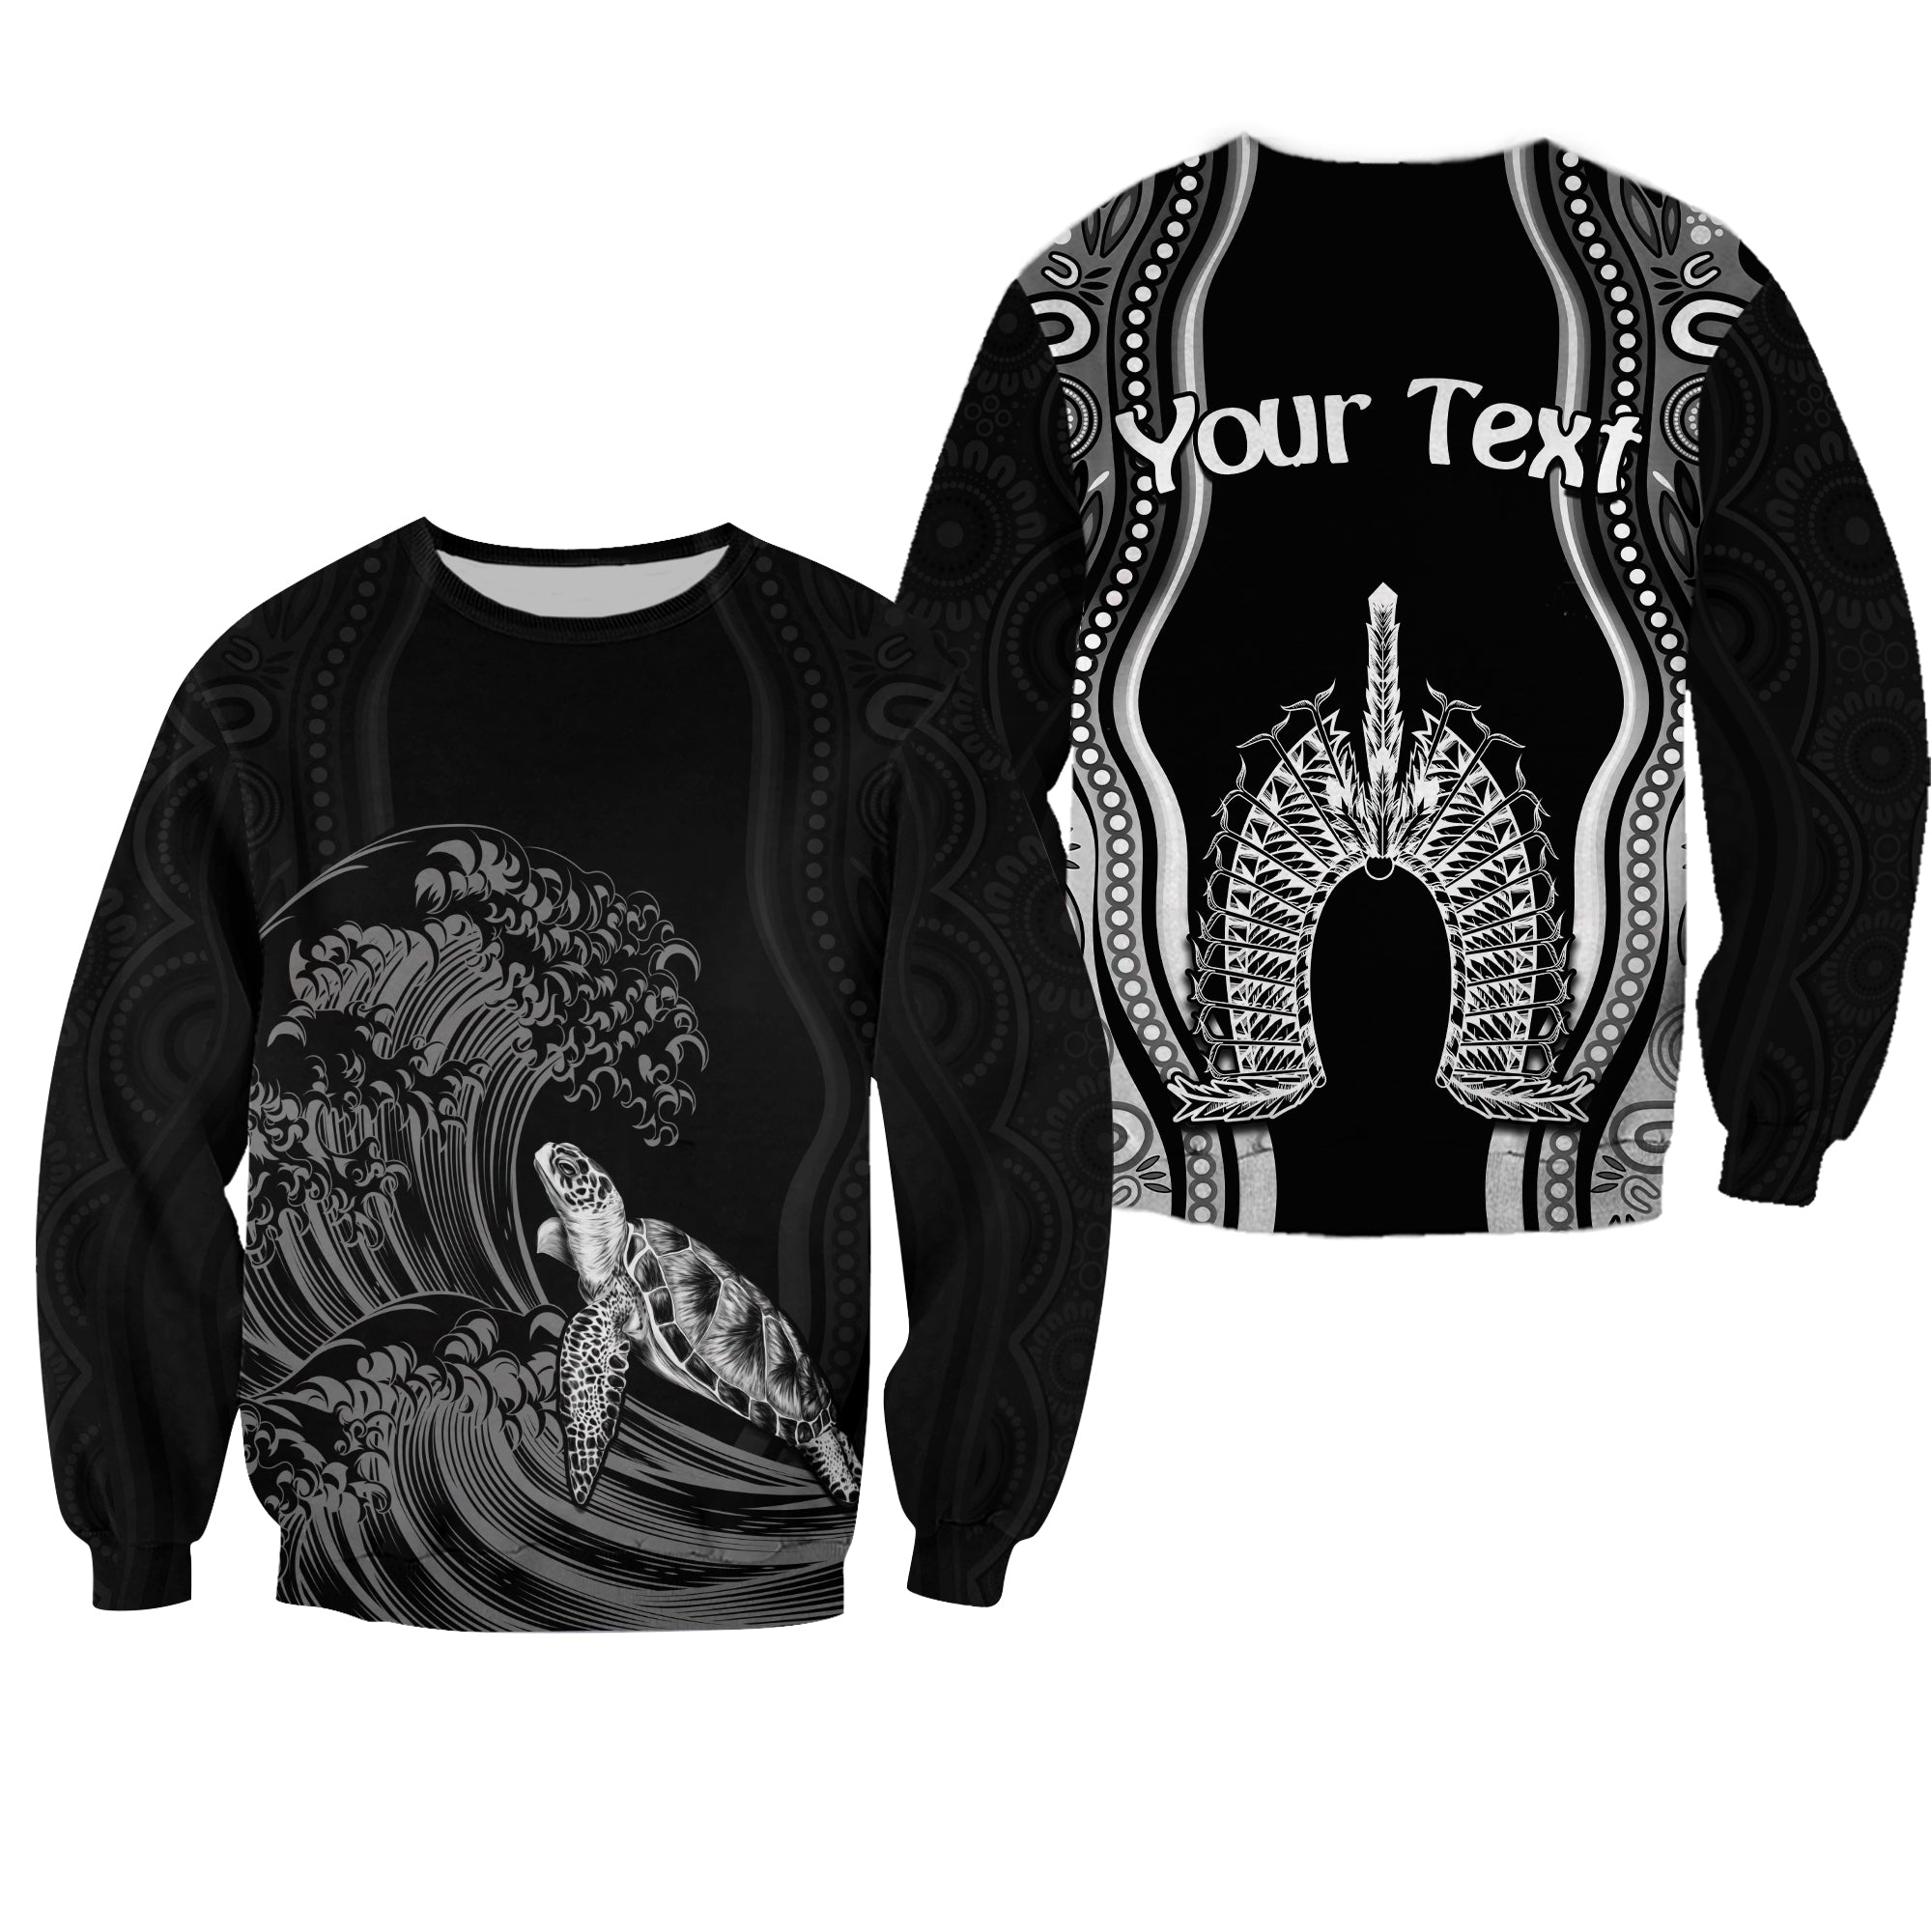 custom-personalised-torres-strait-islands-sweatshirt-the-dhari-mix-aboriginal-turtle-version-black-lt13